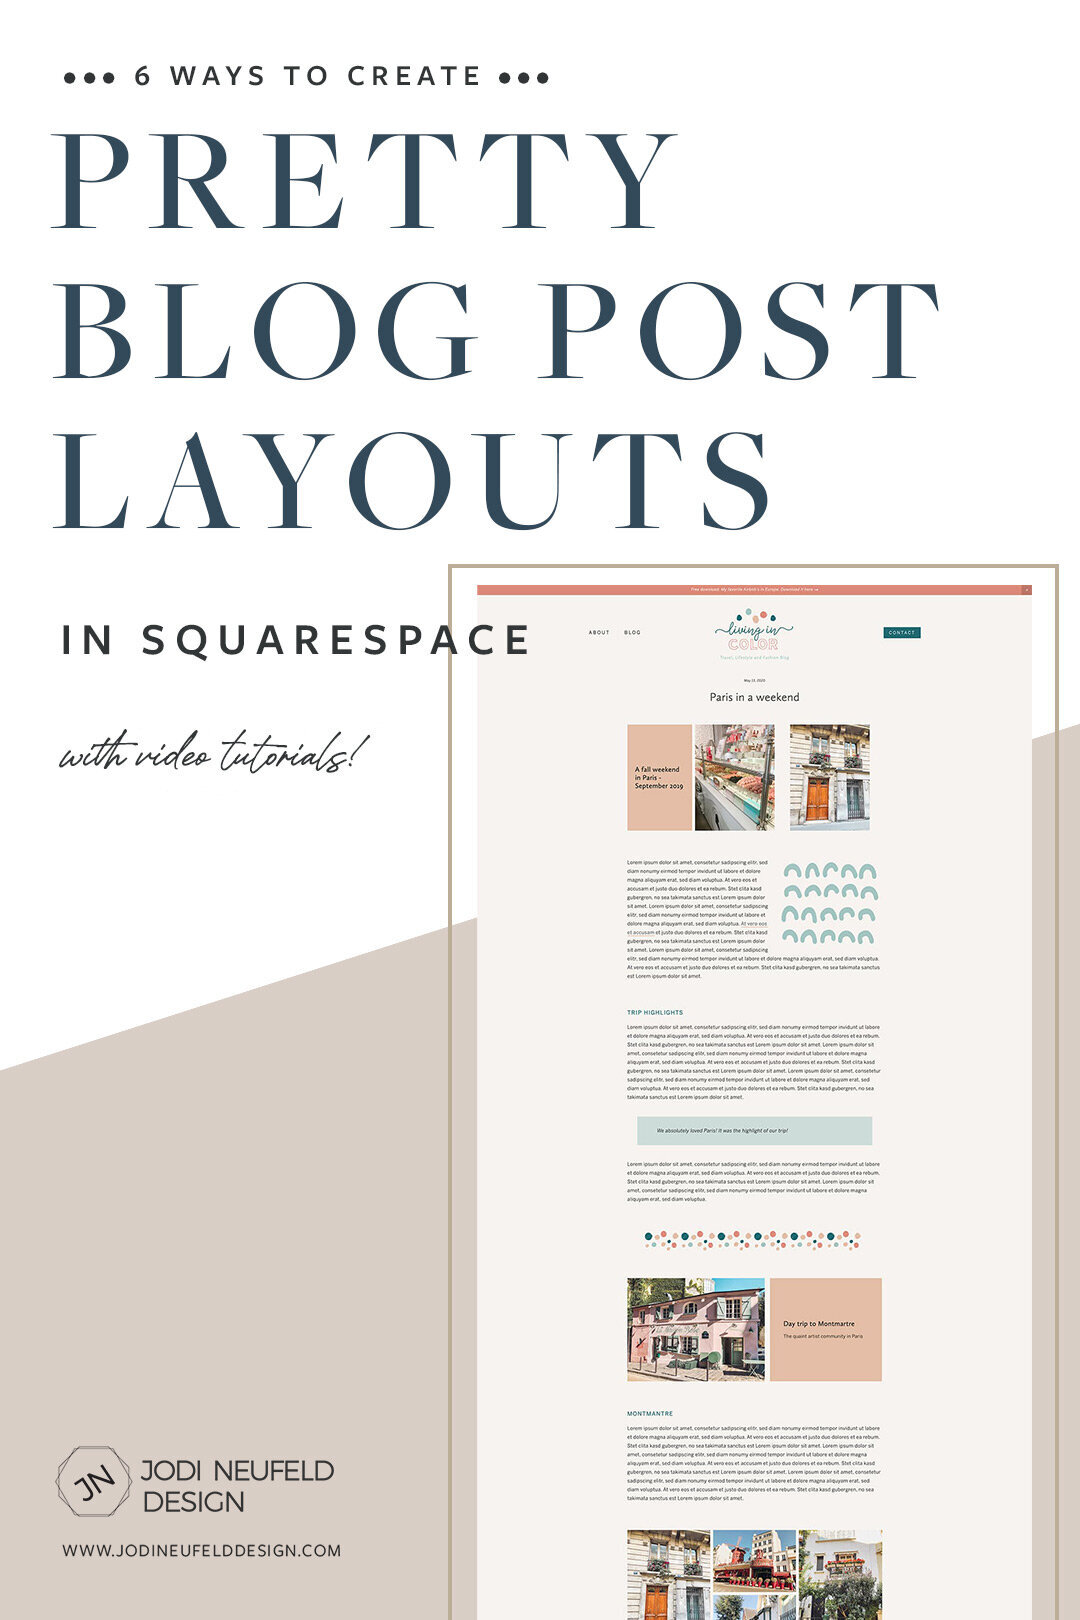 6 ways to create pretty blog post layouts in Squarespace by Jodi Neufeld Design